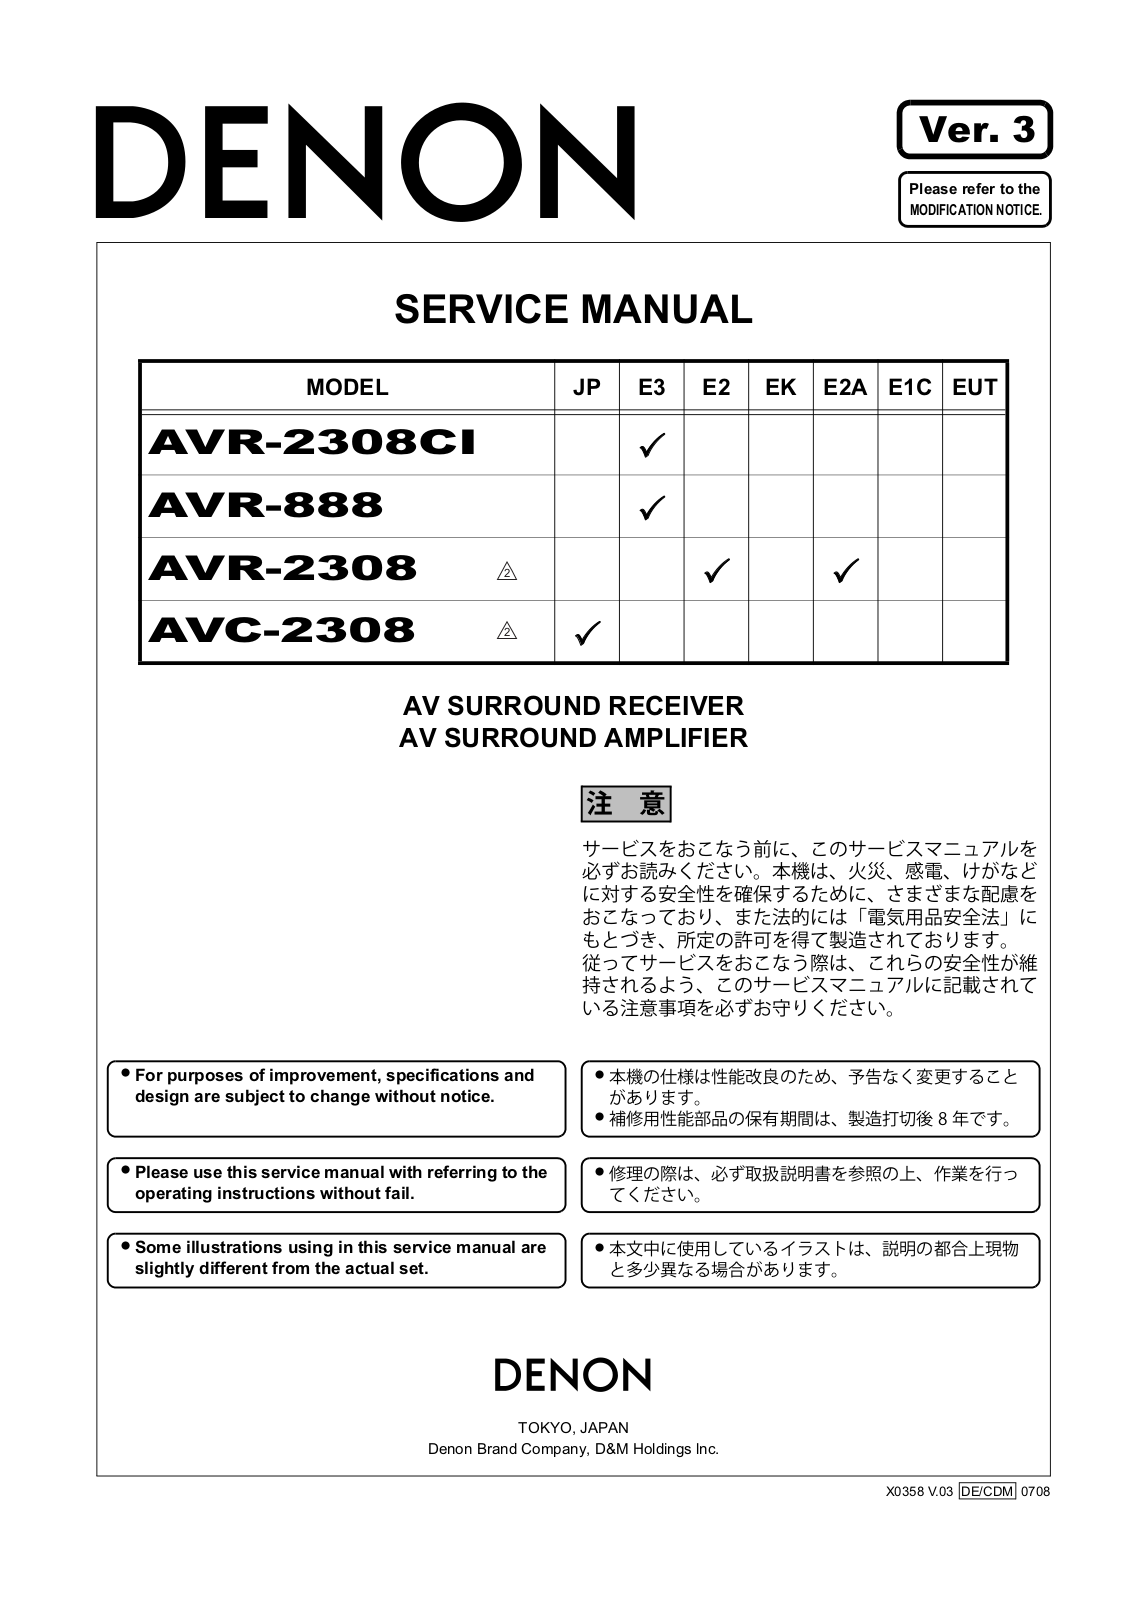 Denon AVR-888, AVR-2308, AVC-2308, AVR-2308-CI Service Manual